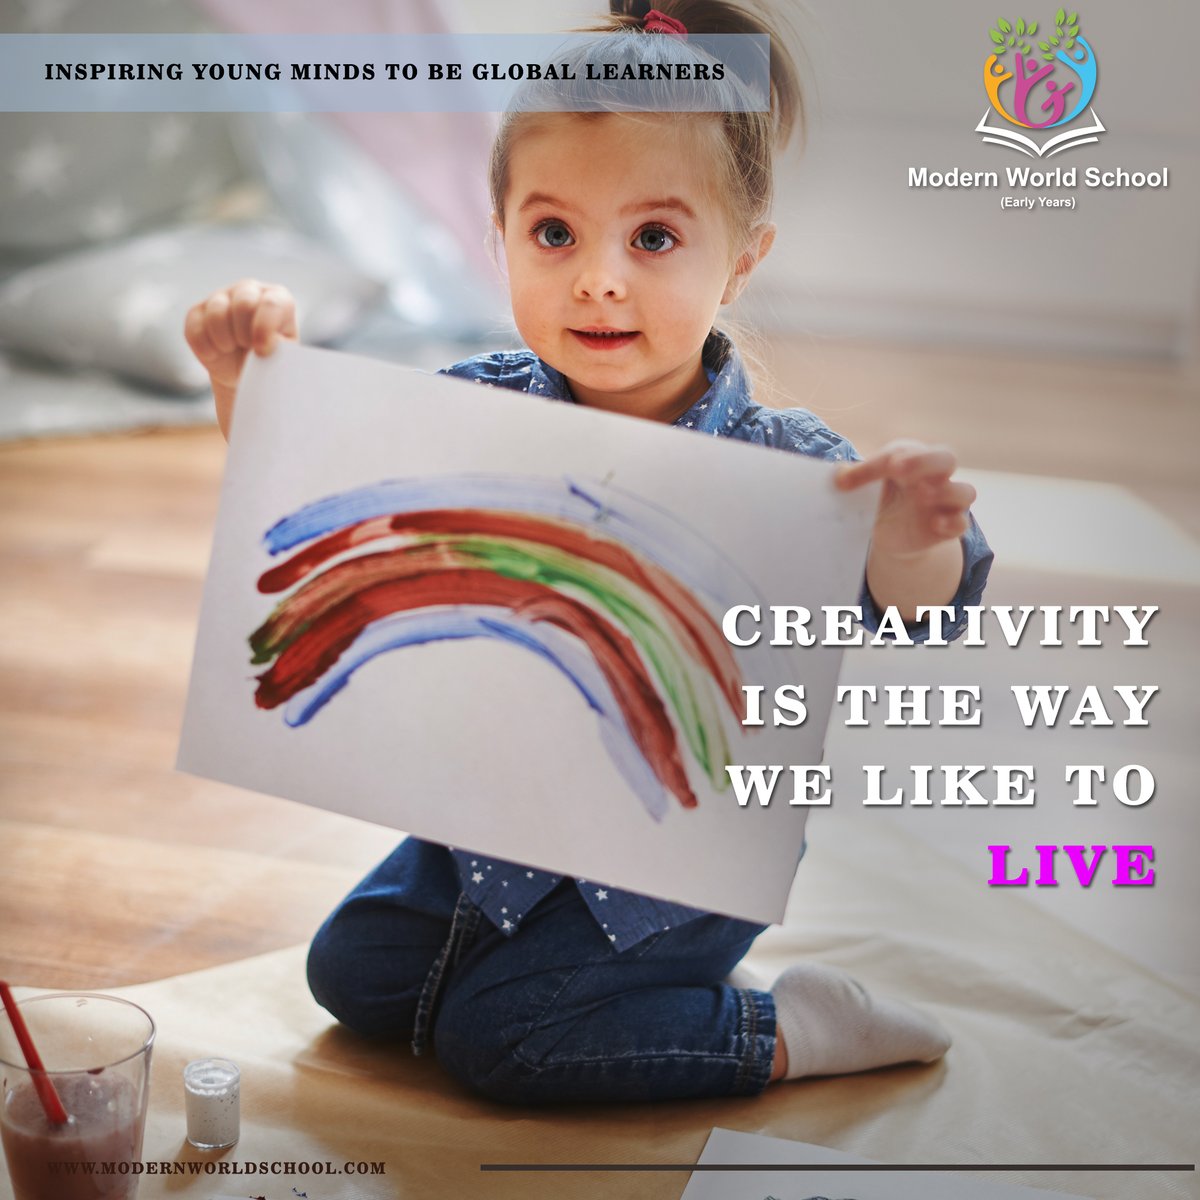 Art helps children to become more like themselves instead of more like everyone else.
#art #artist #modernworldschool #PreSchooler #letthemexplore #arteducation #arteducationmatters #preschoolactivities